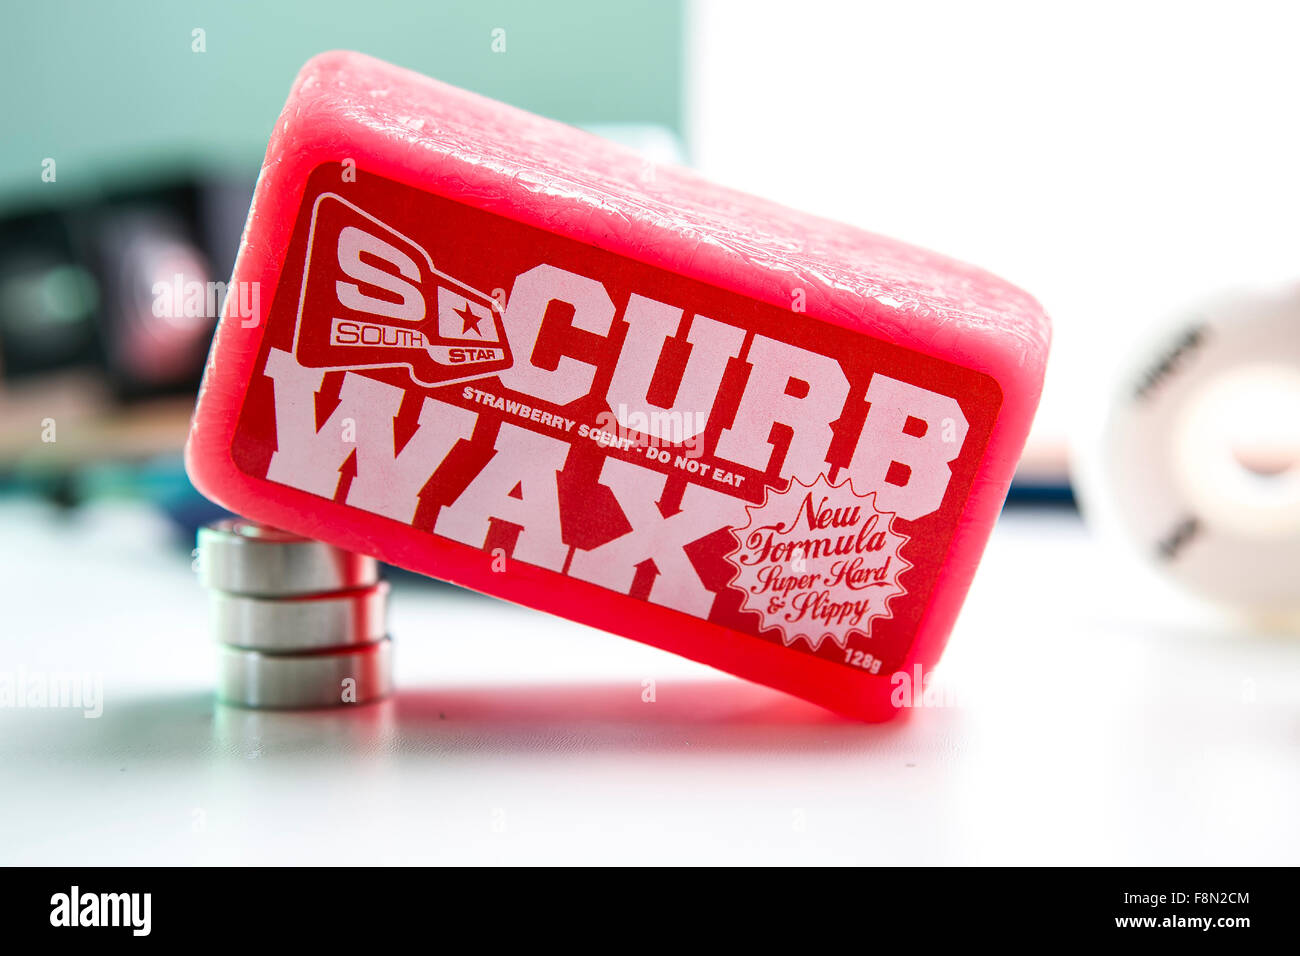 South Star Curb Wax Stock Photo